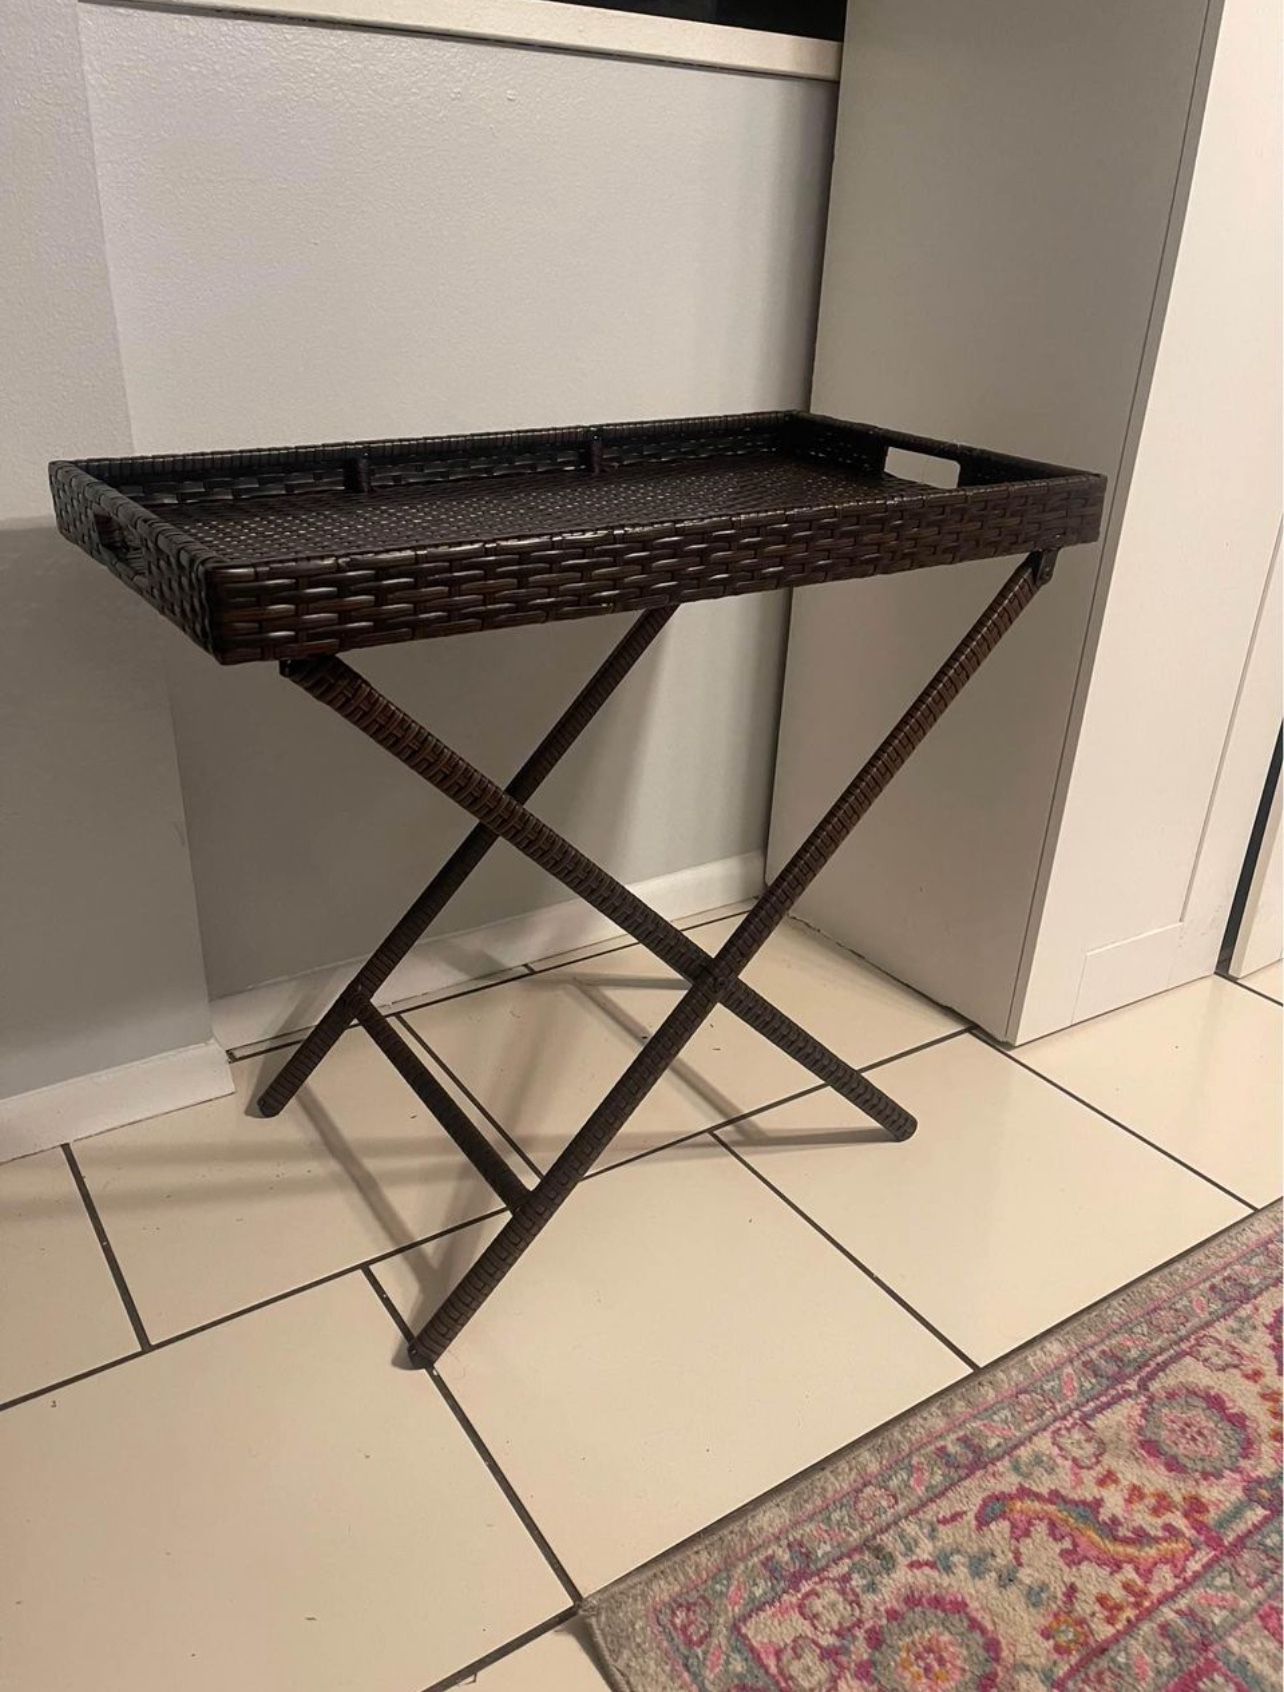 IKEA Portable Foldable Table